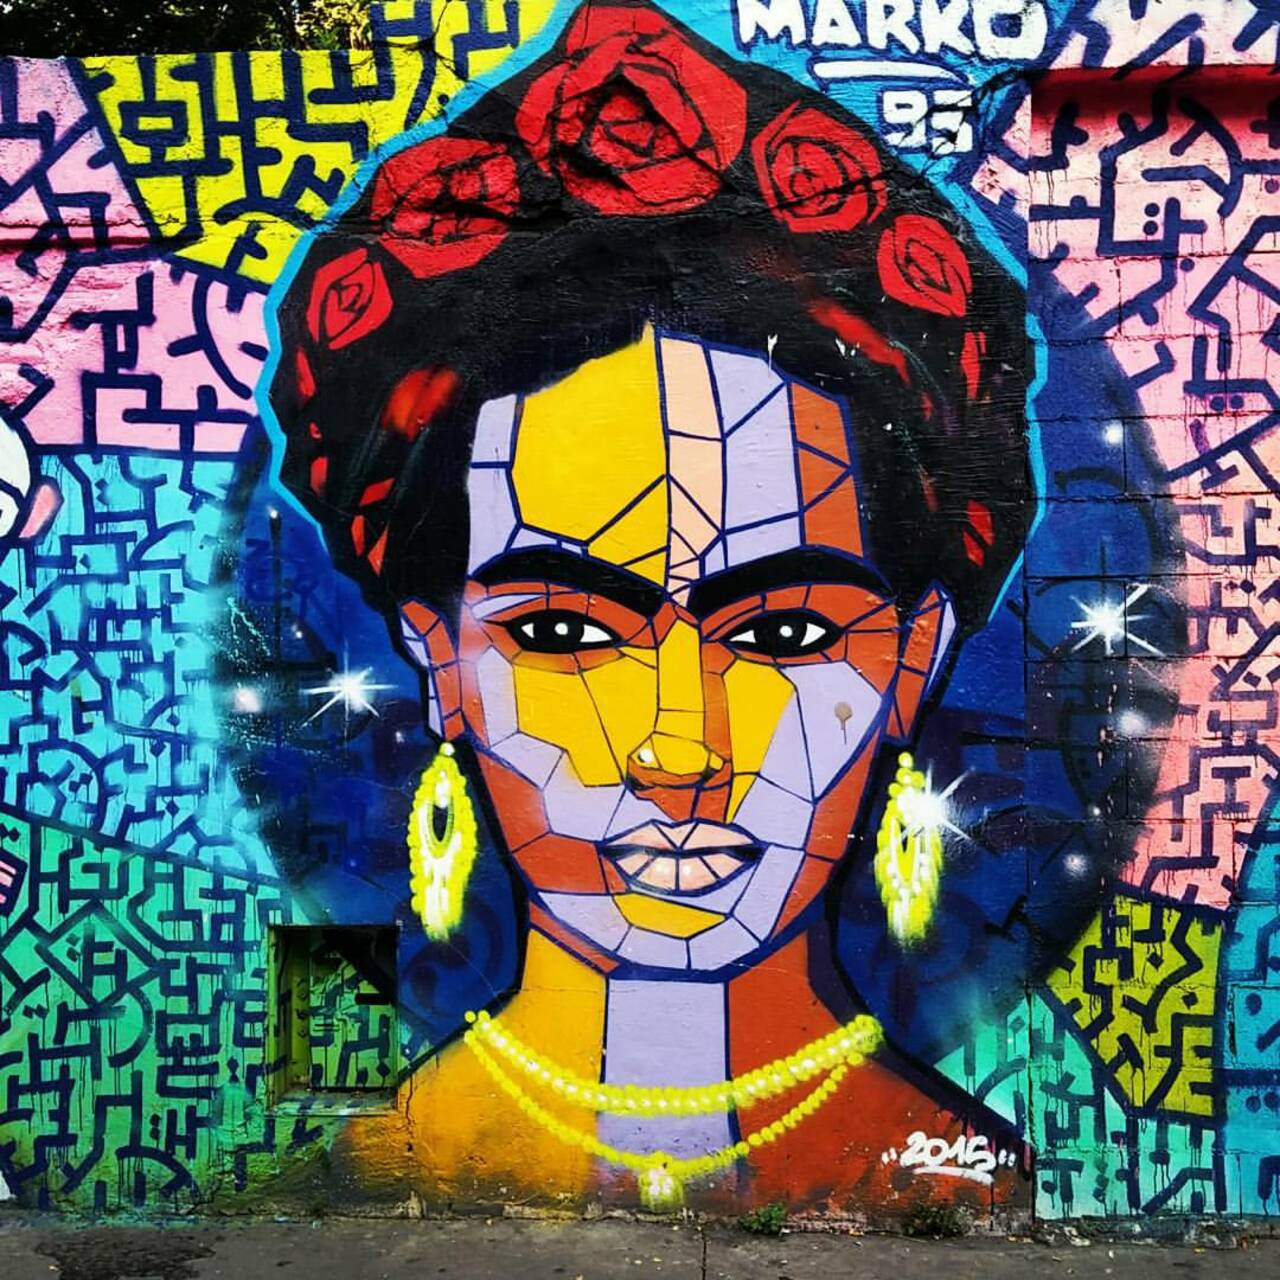 itsWanda: RT Brindille_: #Streetart #urbanart #graffiti #mural "Frida Kahlo", 2015 de l'artiste Marko, #Paris Fran… http://t.co/P1JwIgBvzf